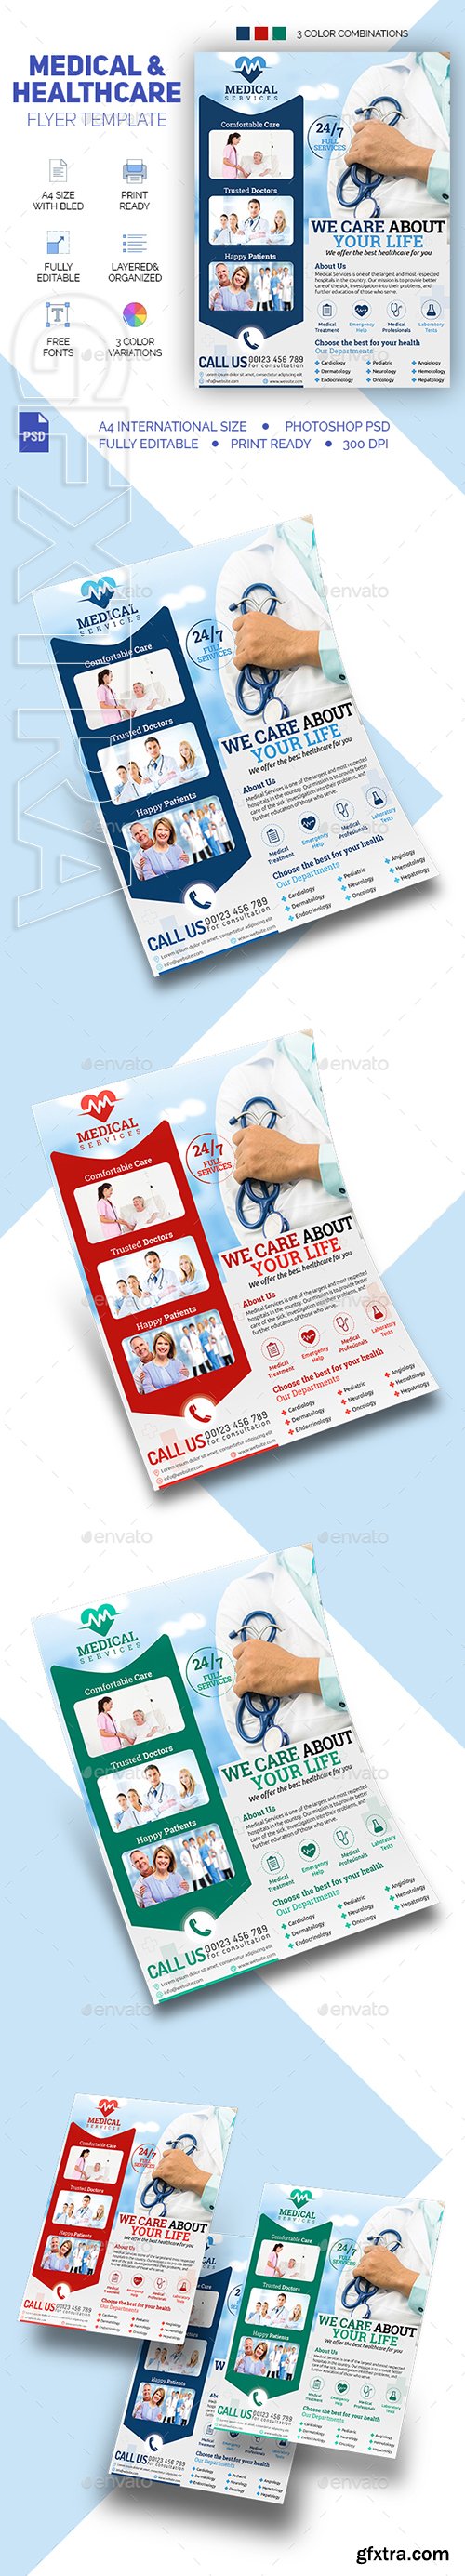 GraphicRiver - Medical & Healthcare Flyer 22730948